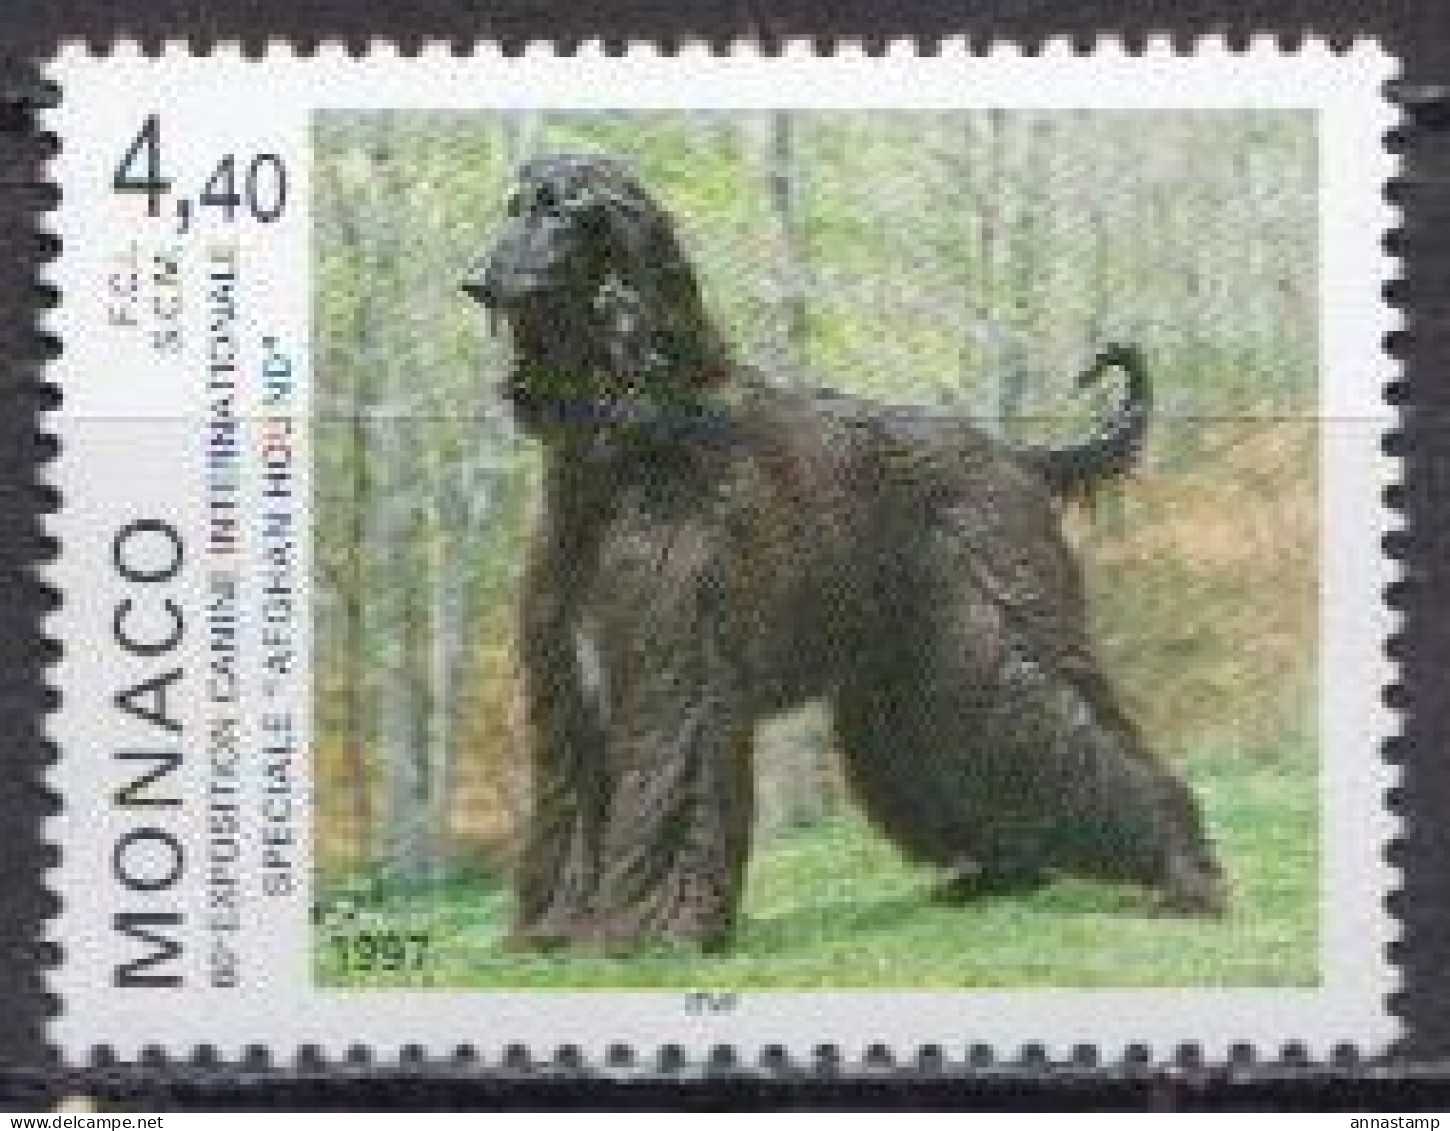 Monaco MNH Stamp - Dogs